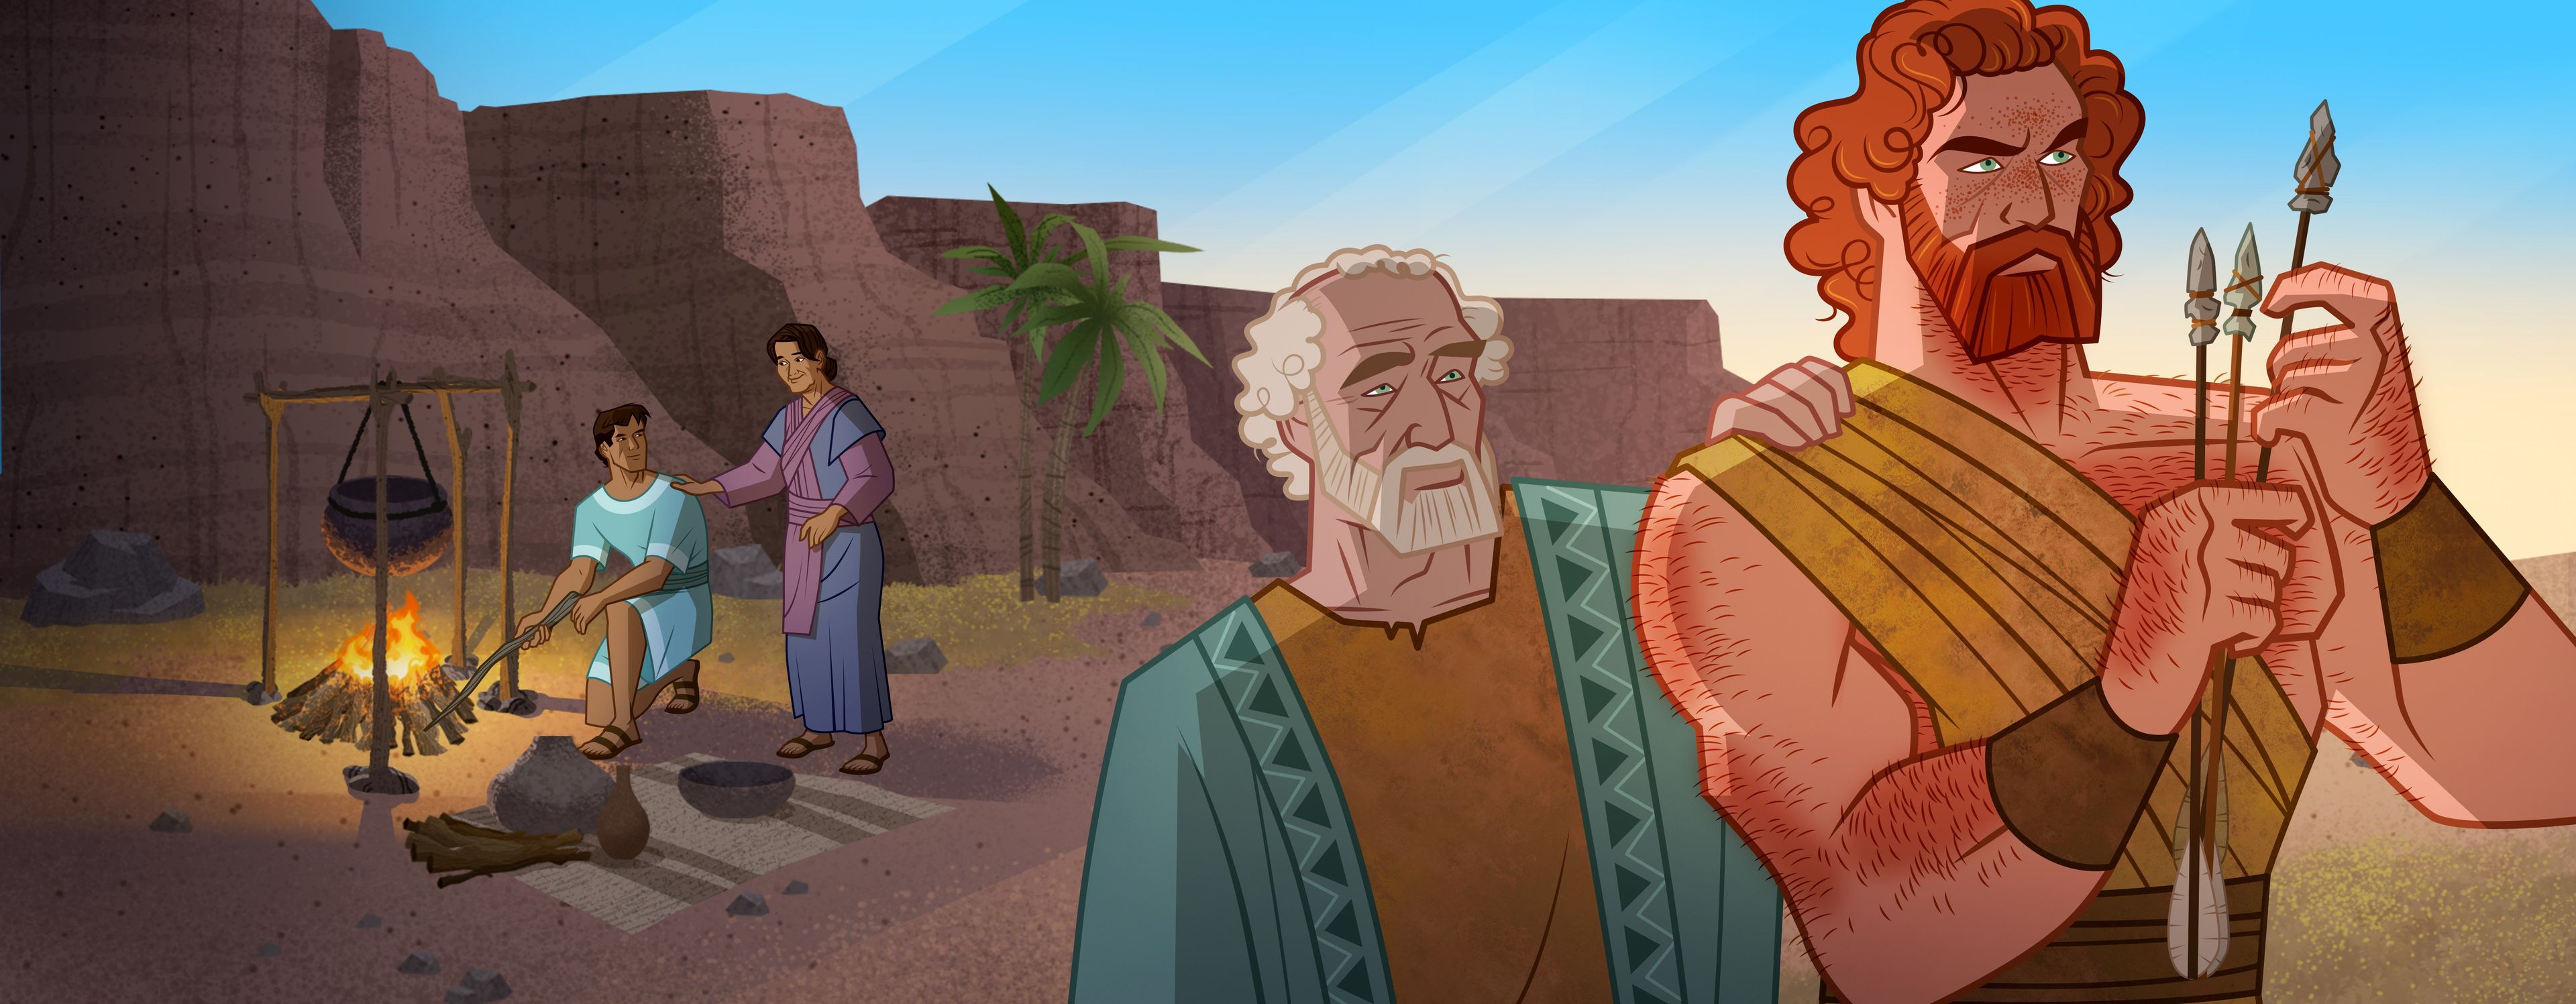 Illustration of Esau and Isaac. Genesis 25:25, 32; 26:34–35